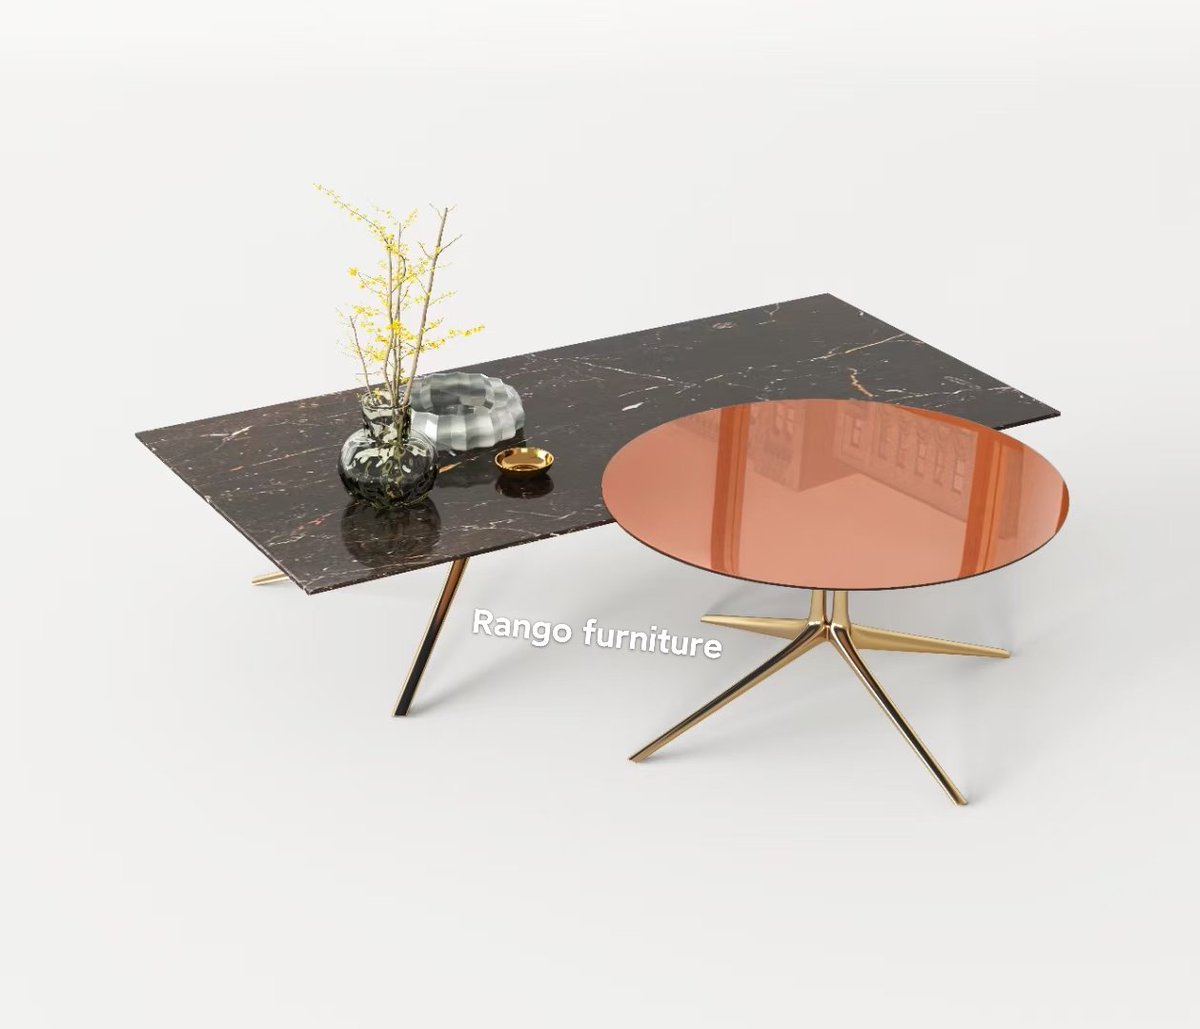 Rango furniture New designs of coffee table set 
#foshanrangofurniture #stainlesssteelfurniture 
#coffeetable 
#homefurniture 
#customizeddesign 
#customizedfurniture